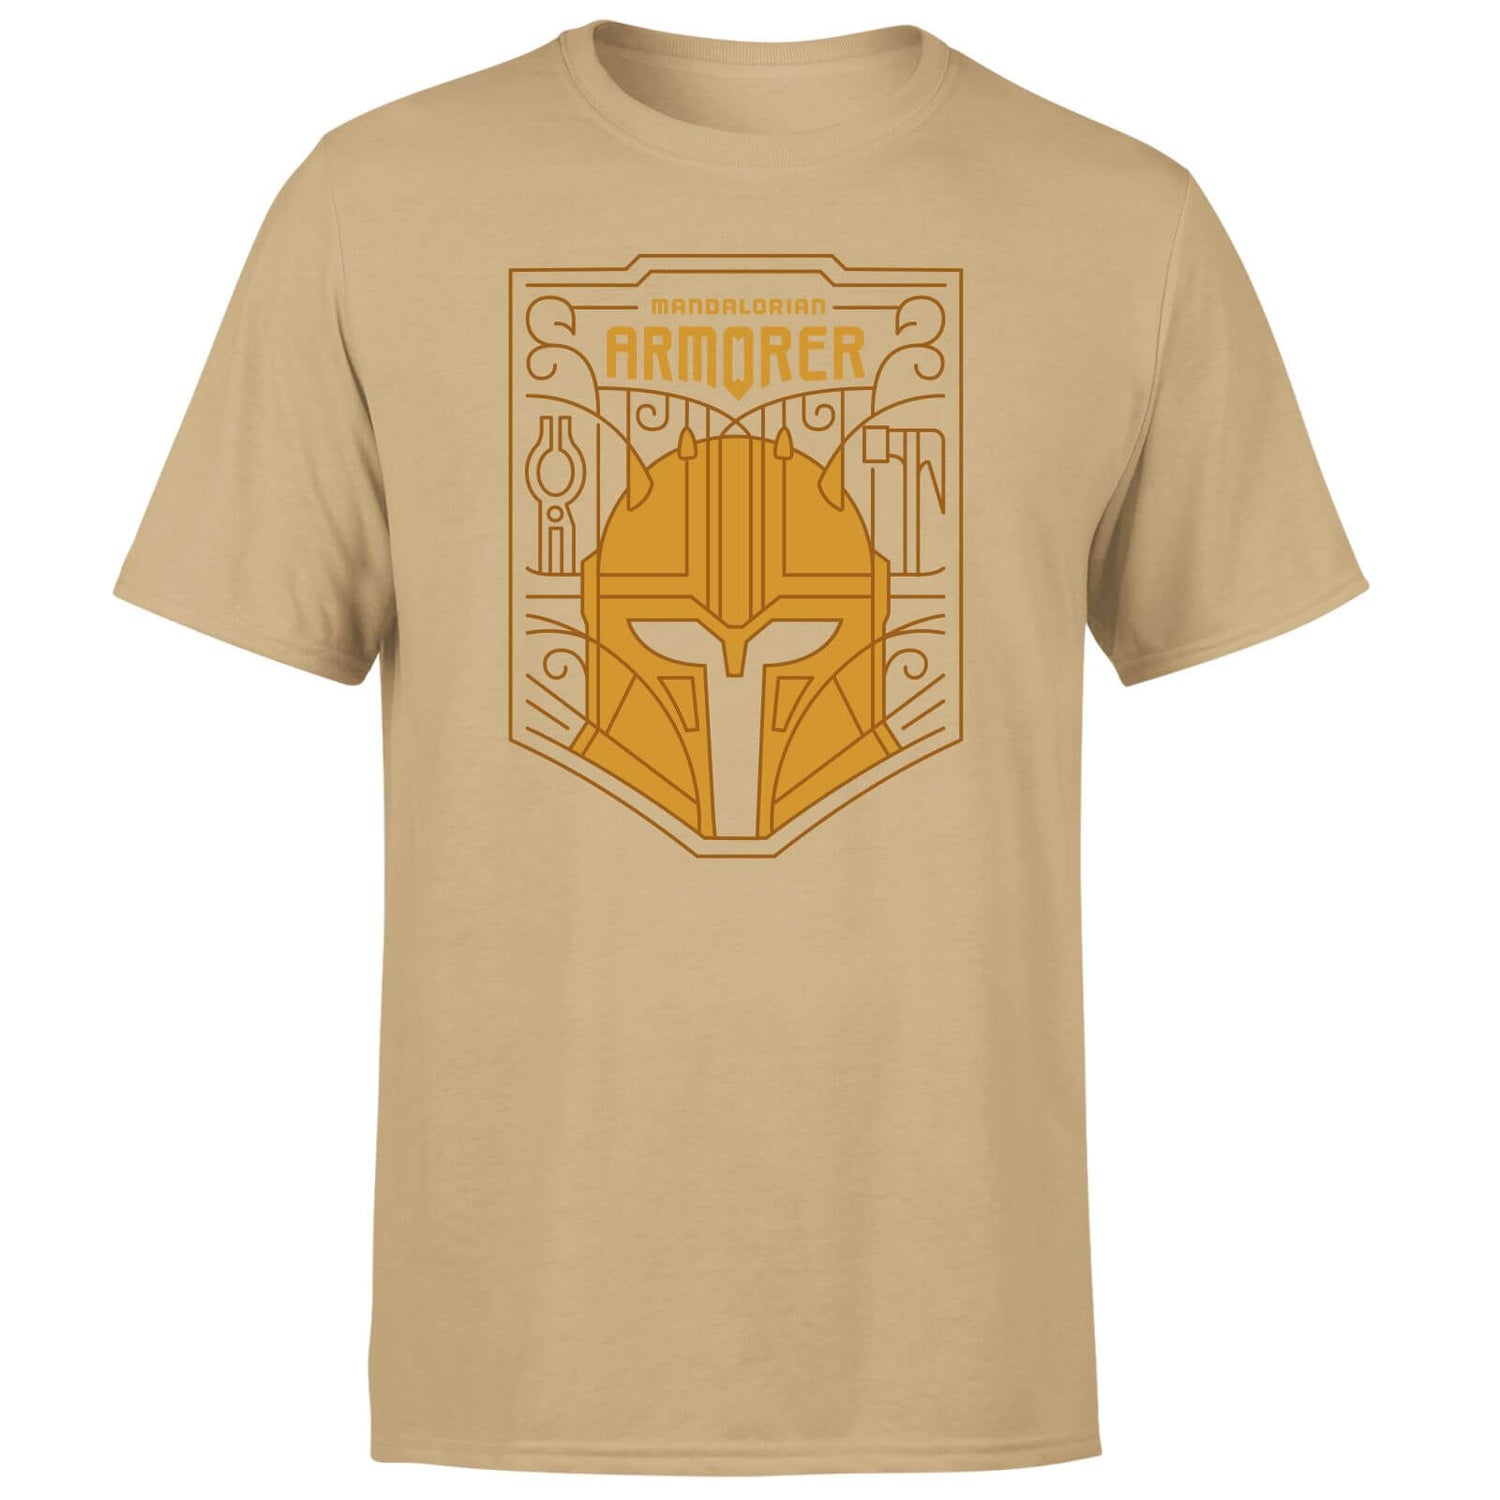 Star Wars The Mandalorian The Armorer Badge Men's T-Shirt - Tan